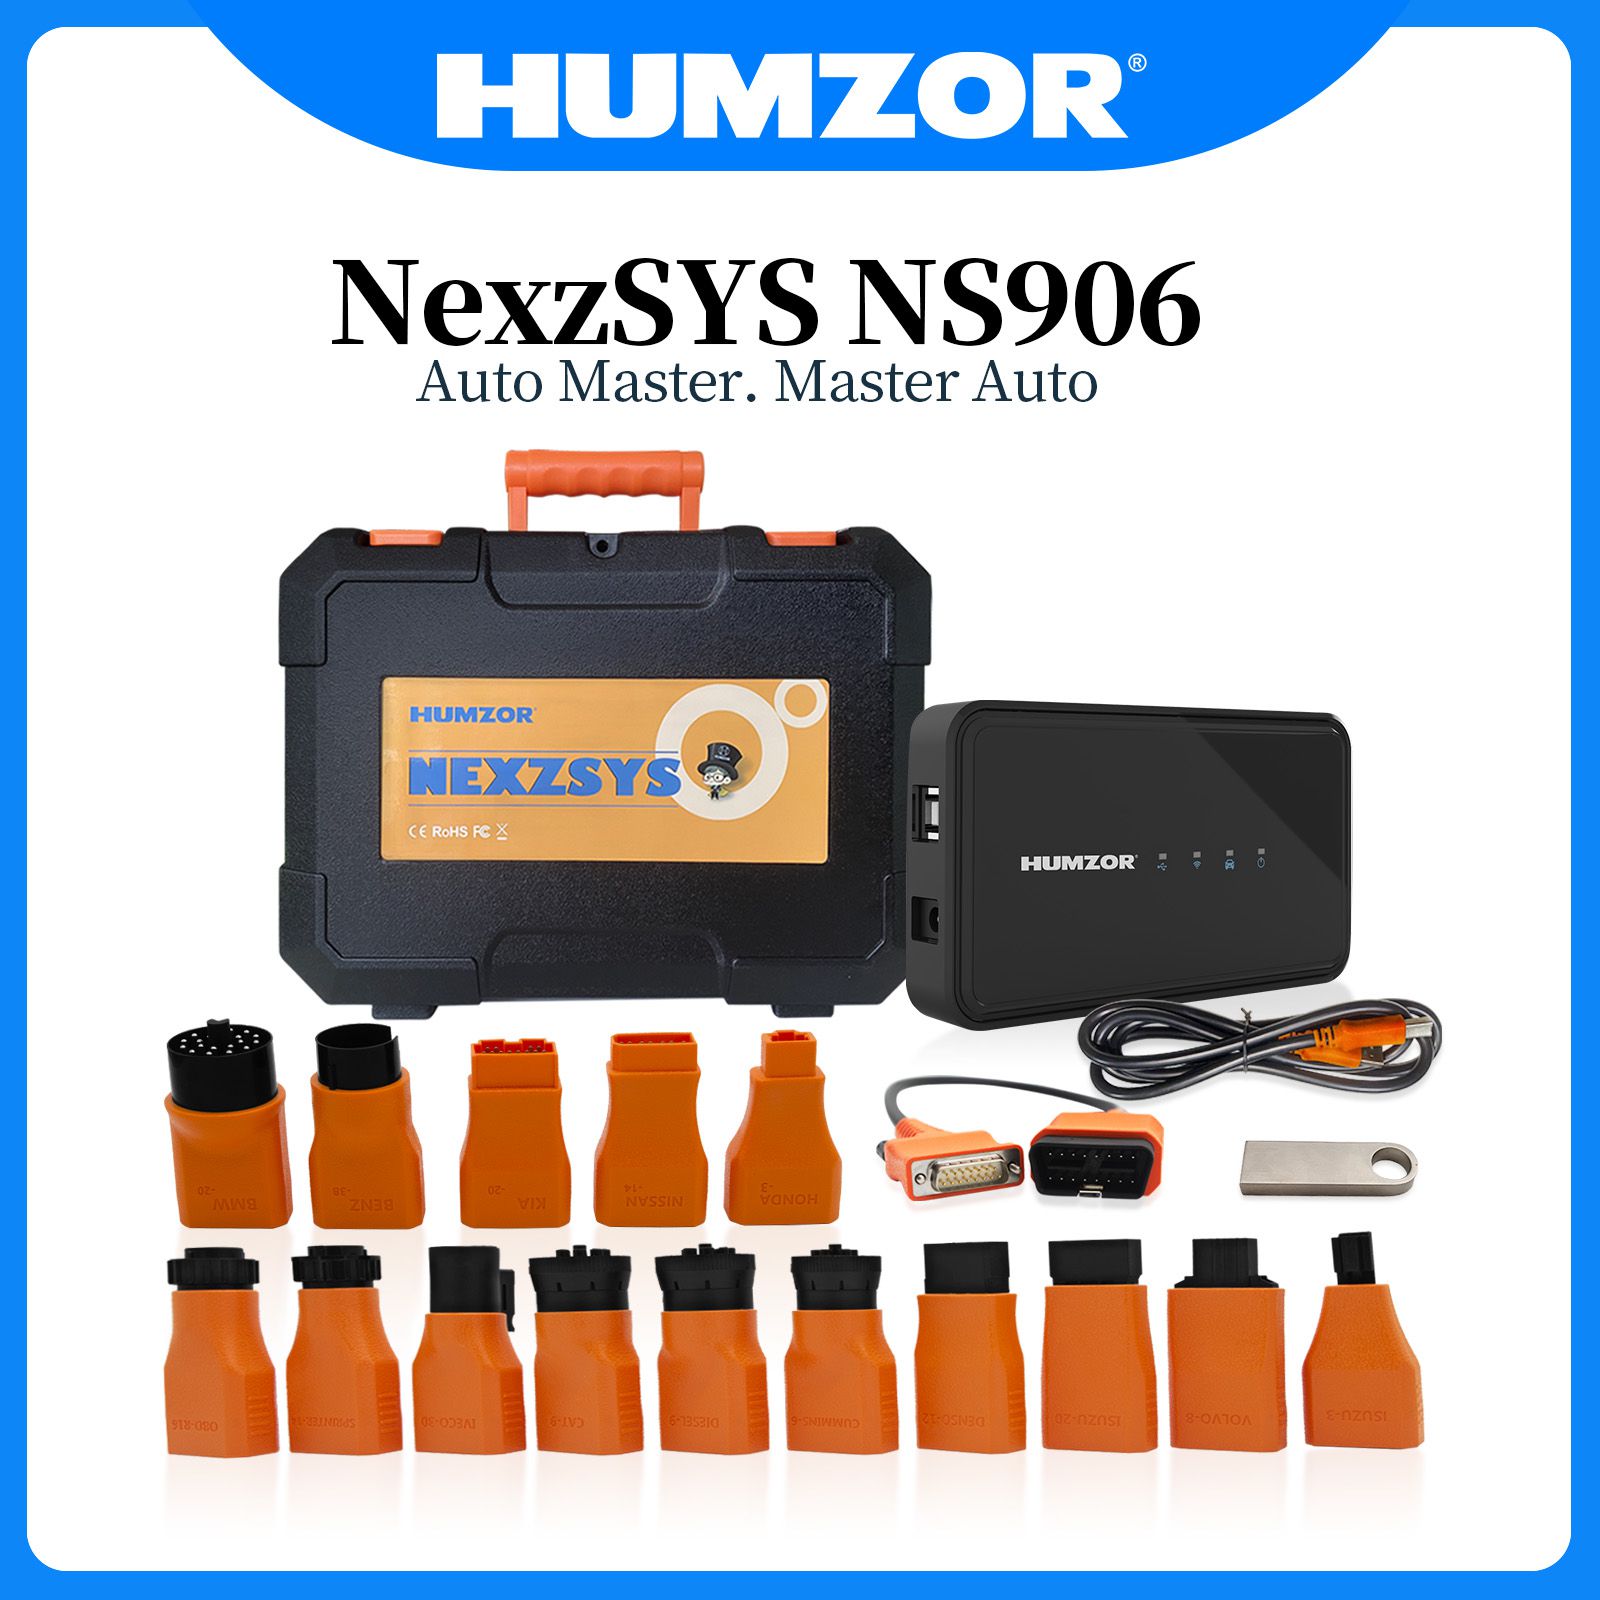 HUMZOR NexzSYS NS906 자동차 및 트럭 진단 도구는 Win7/8/10 시스템의 모든 시스템 진단을 지원합니다.